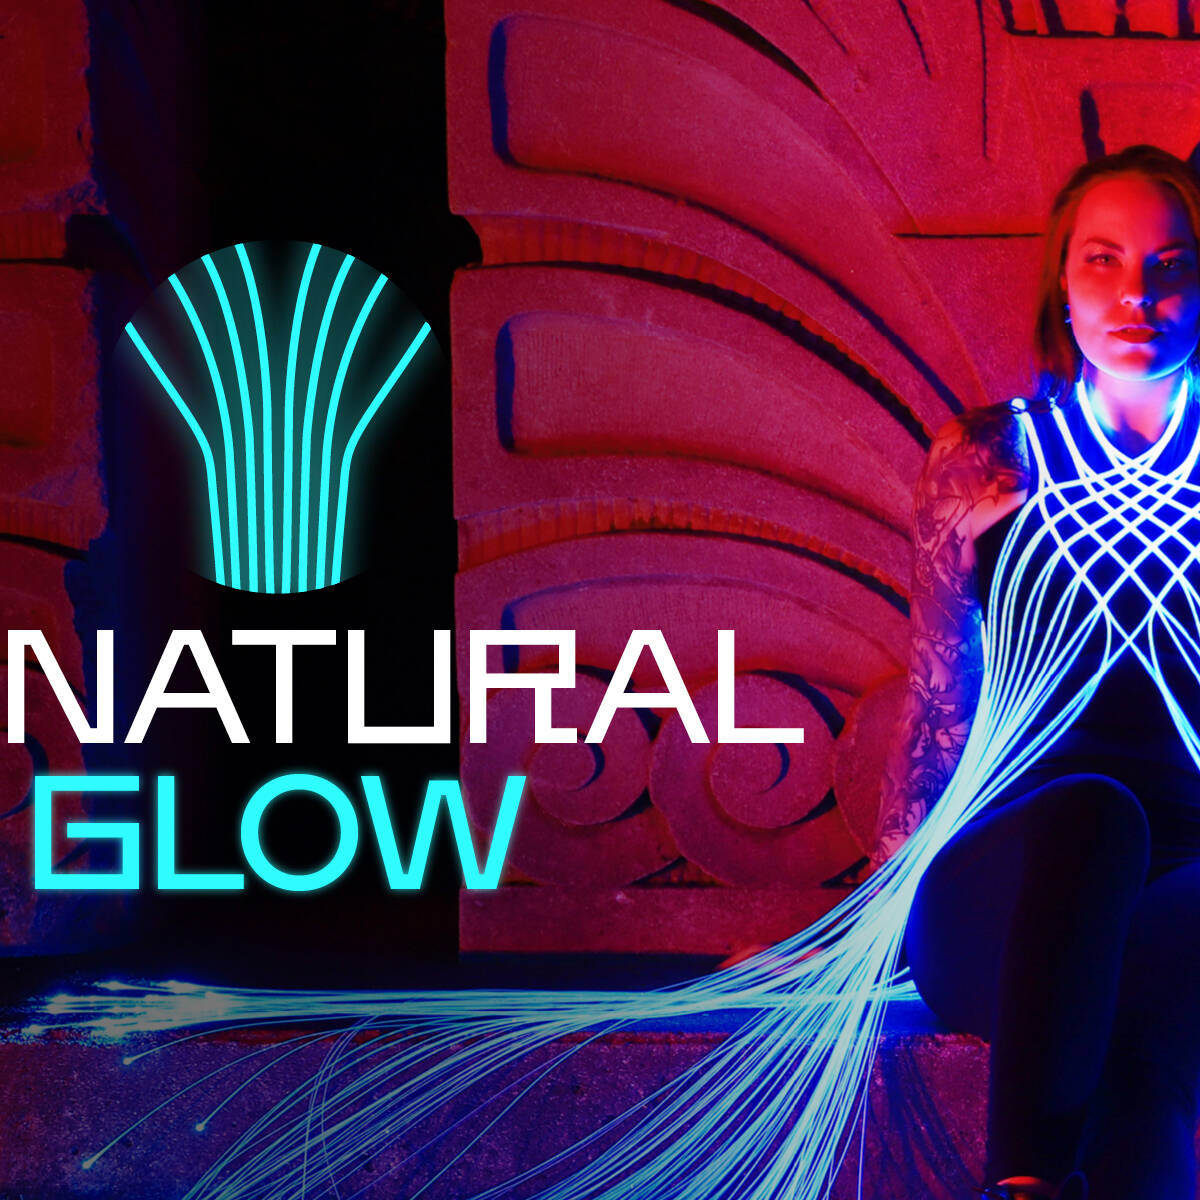 Unnatural-Glow-website-design-toronto-designer-performer